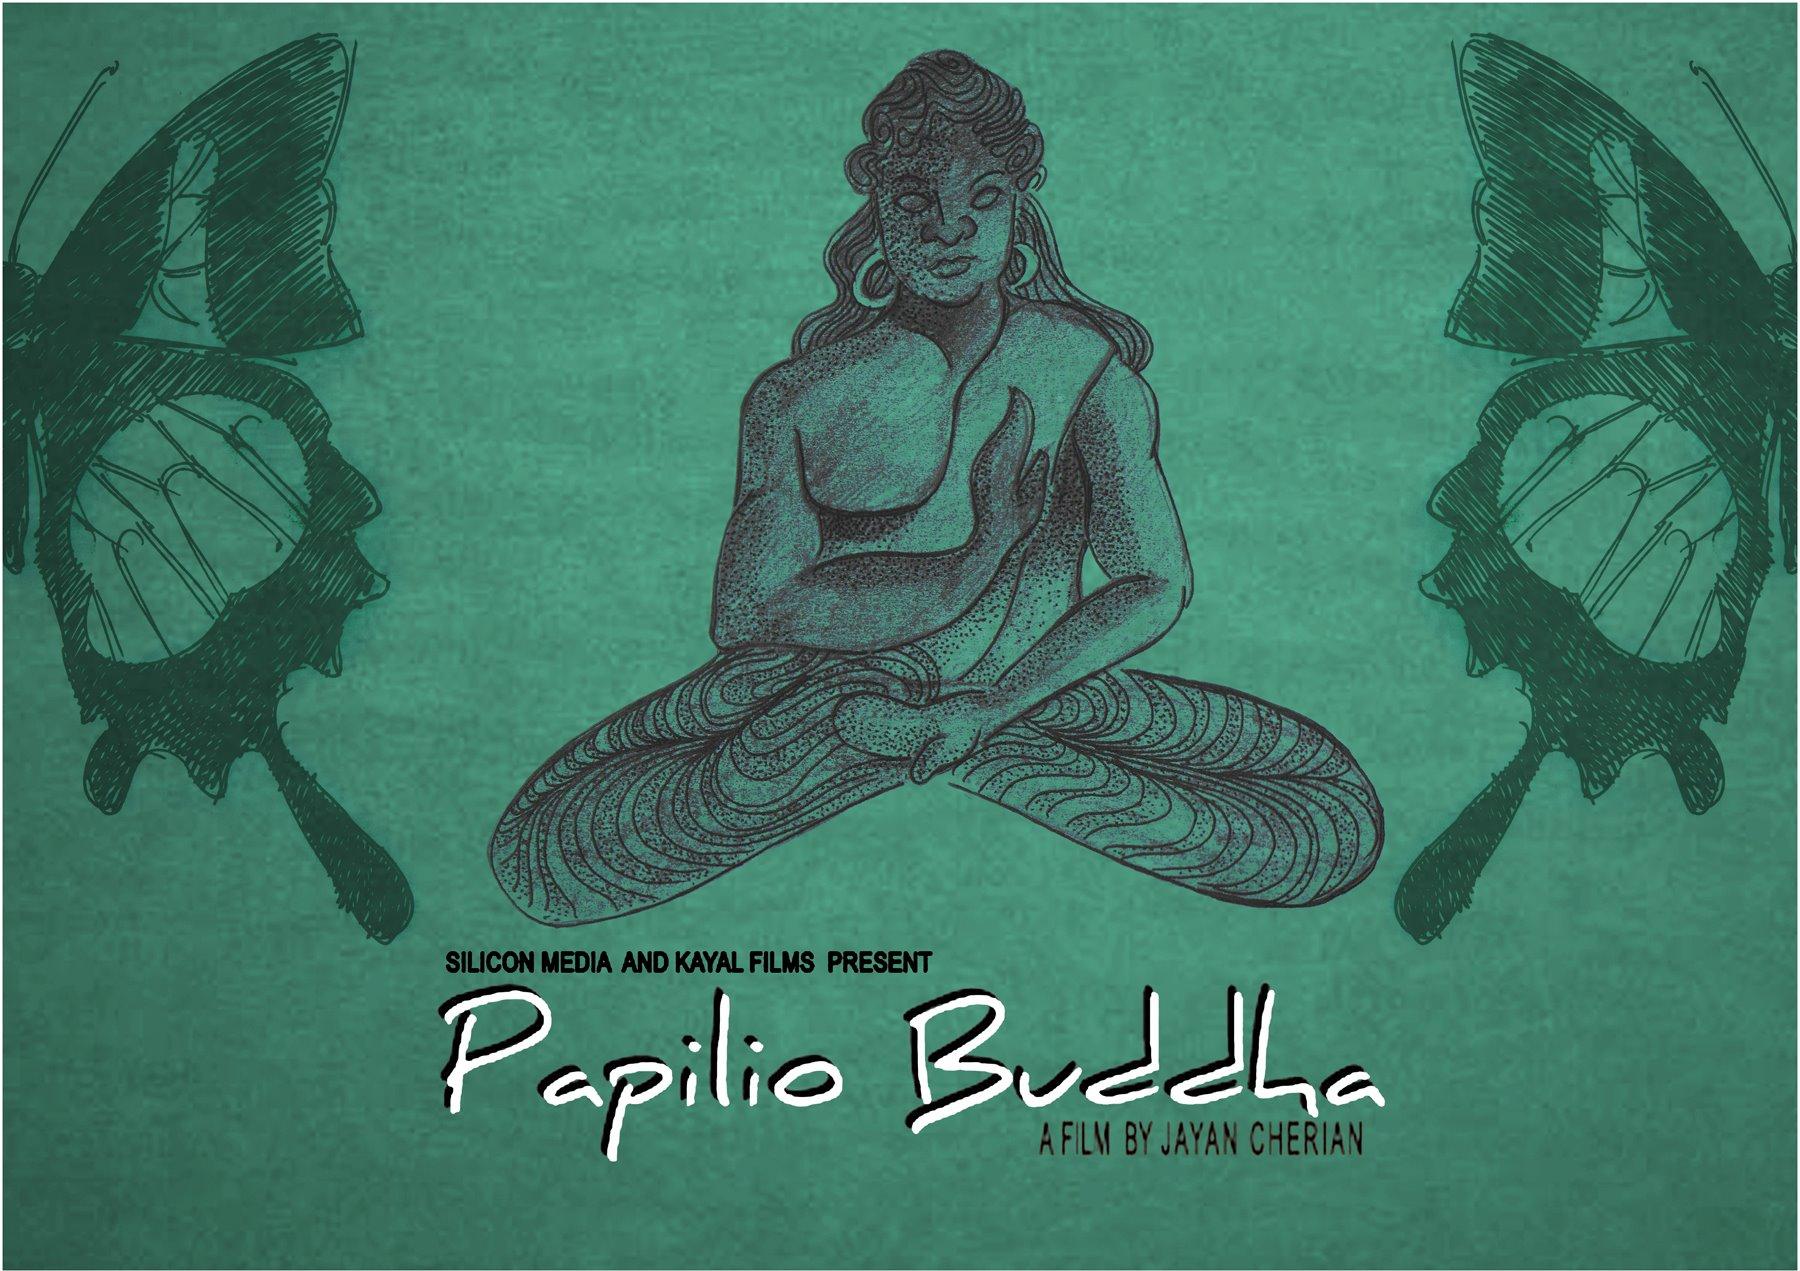 Постер фильма Papilio Buddha